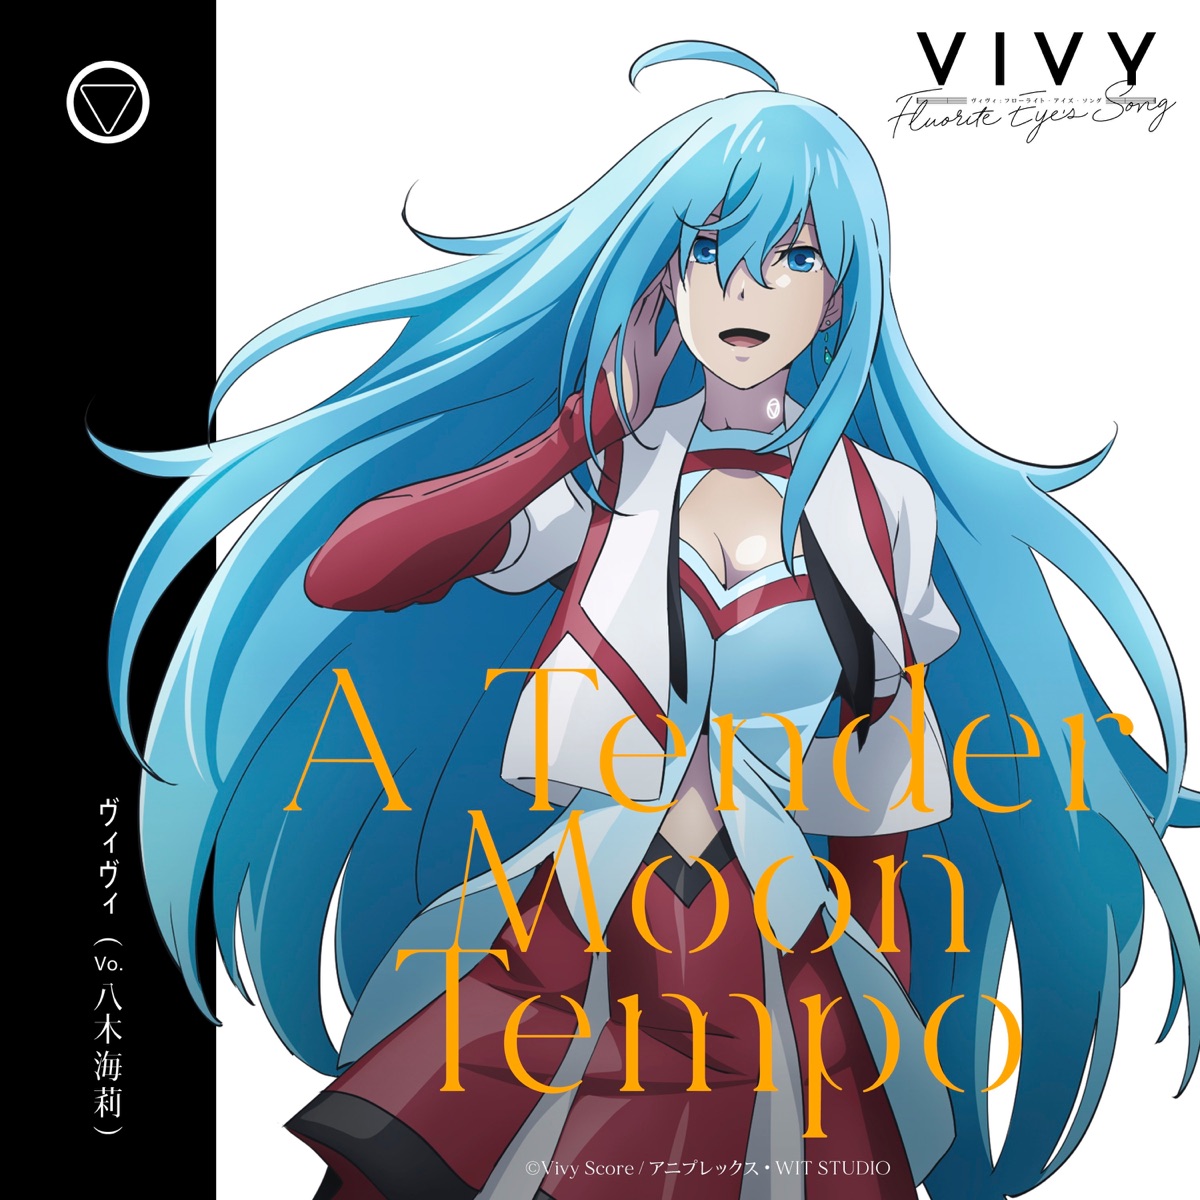 Cover art for『Vivy (Kairi Yagi) - A Tender Moon Tempo』from the release『A Tender Moon Tempo』